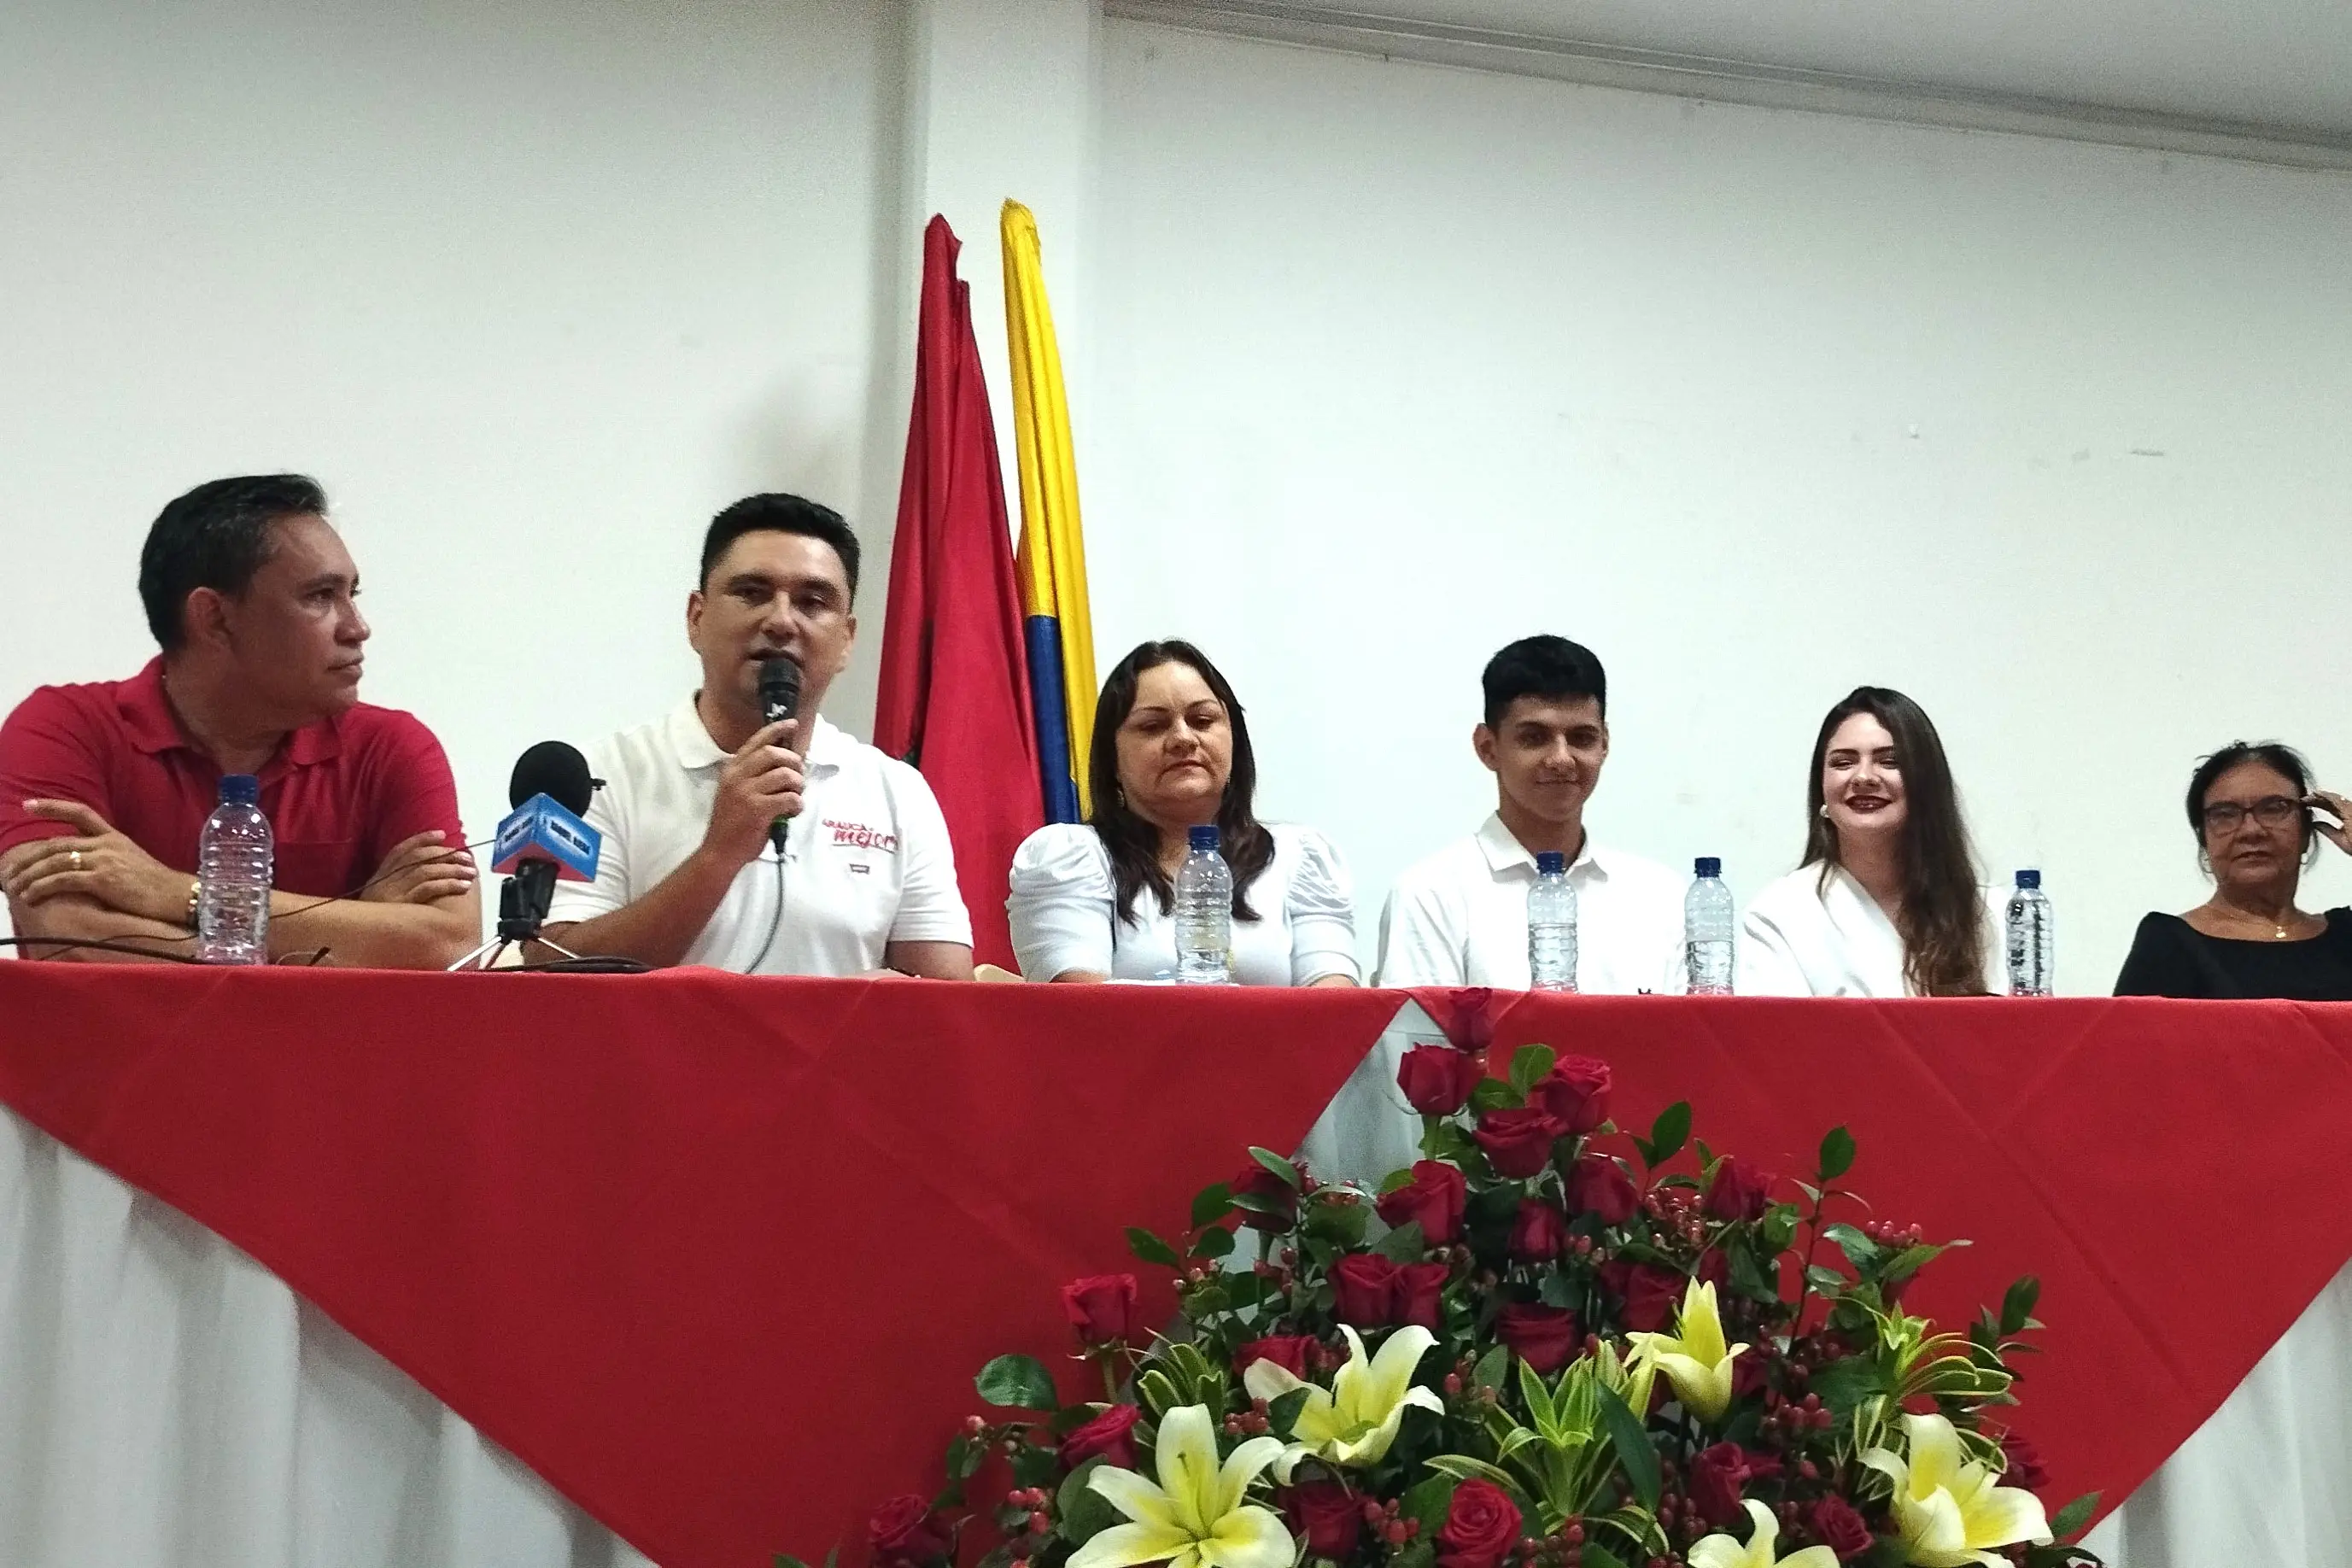 Renson Martínez Proclamado Gobernador de Arauca Tras Intenso Escrutinio